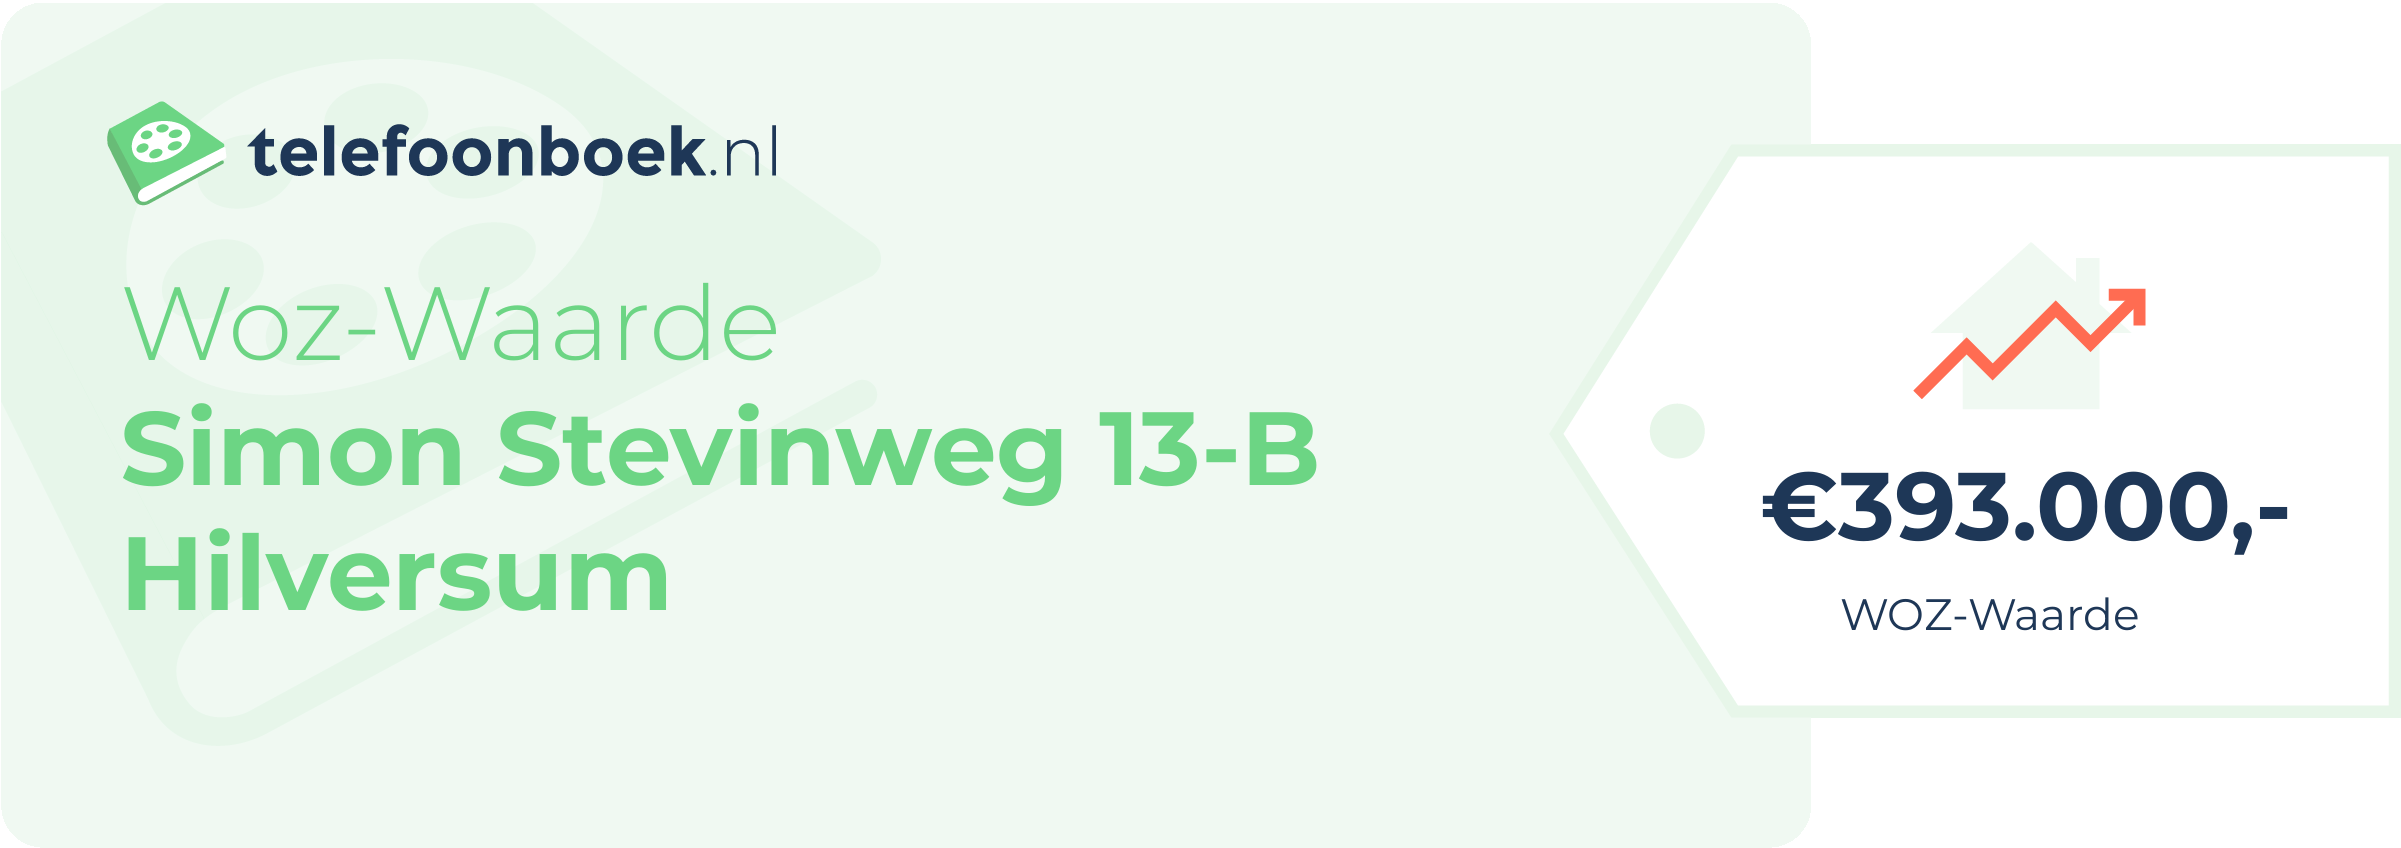 WOZ-waarde Simon Stevinweg 13-B Hilversum